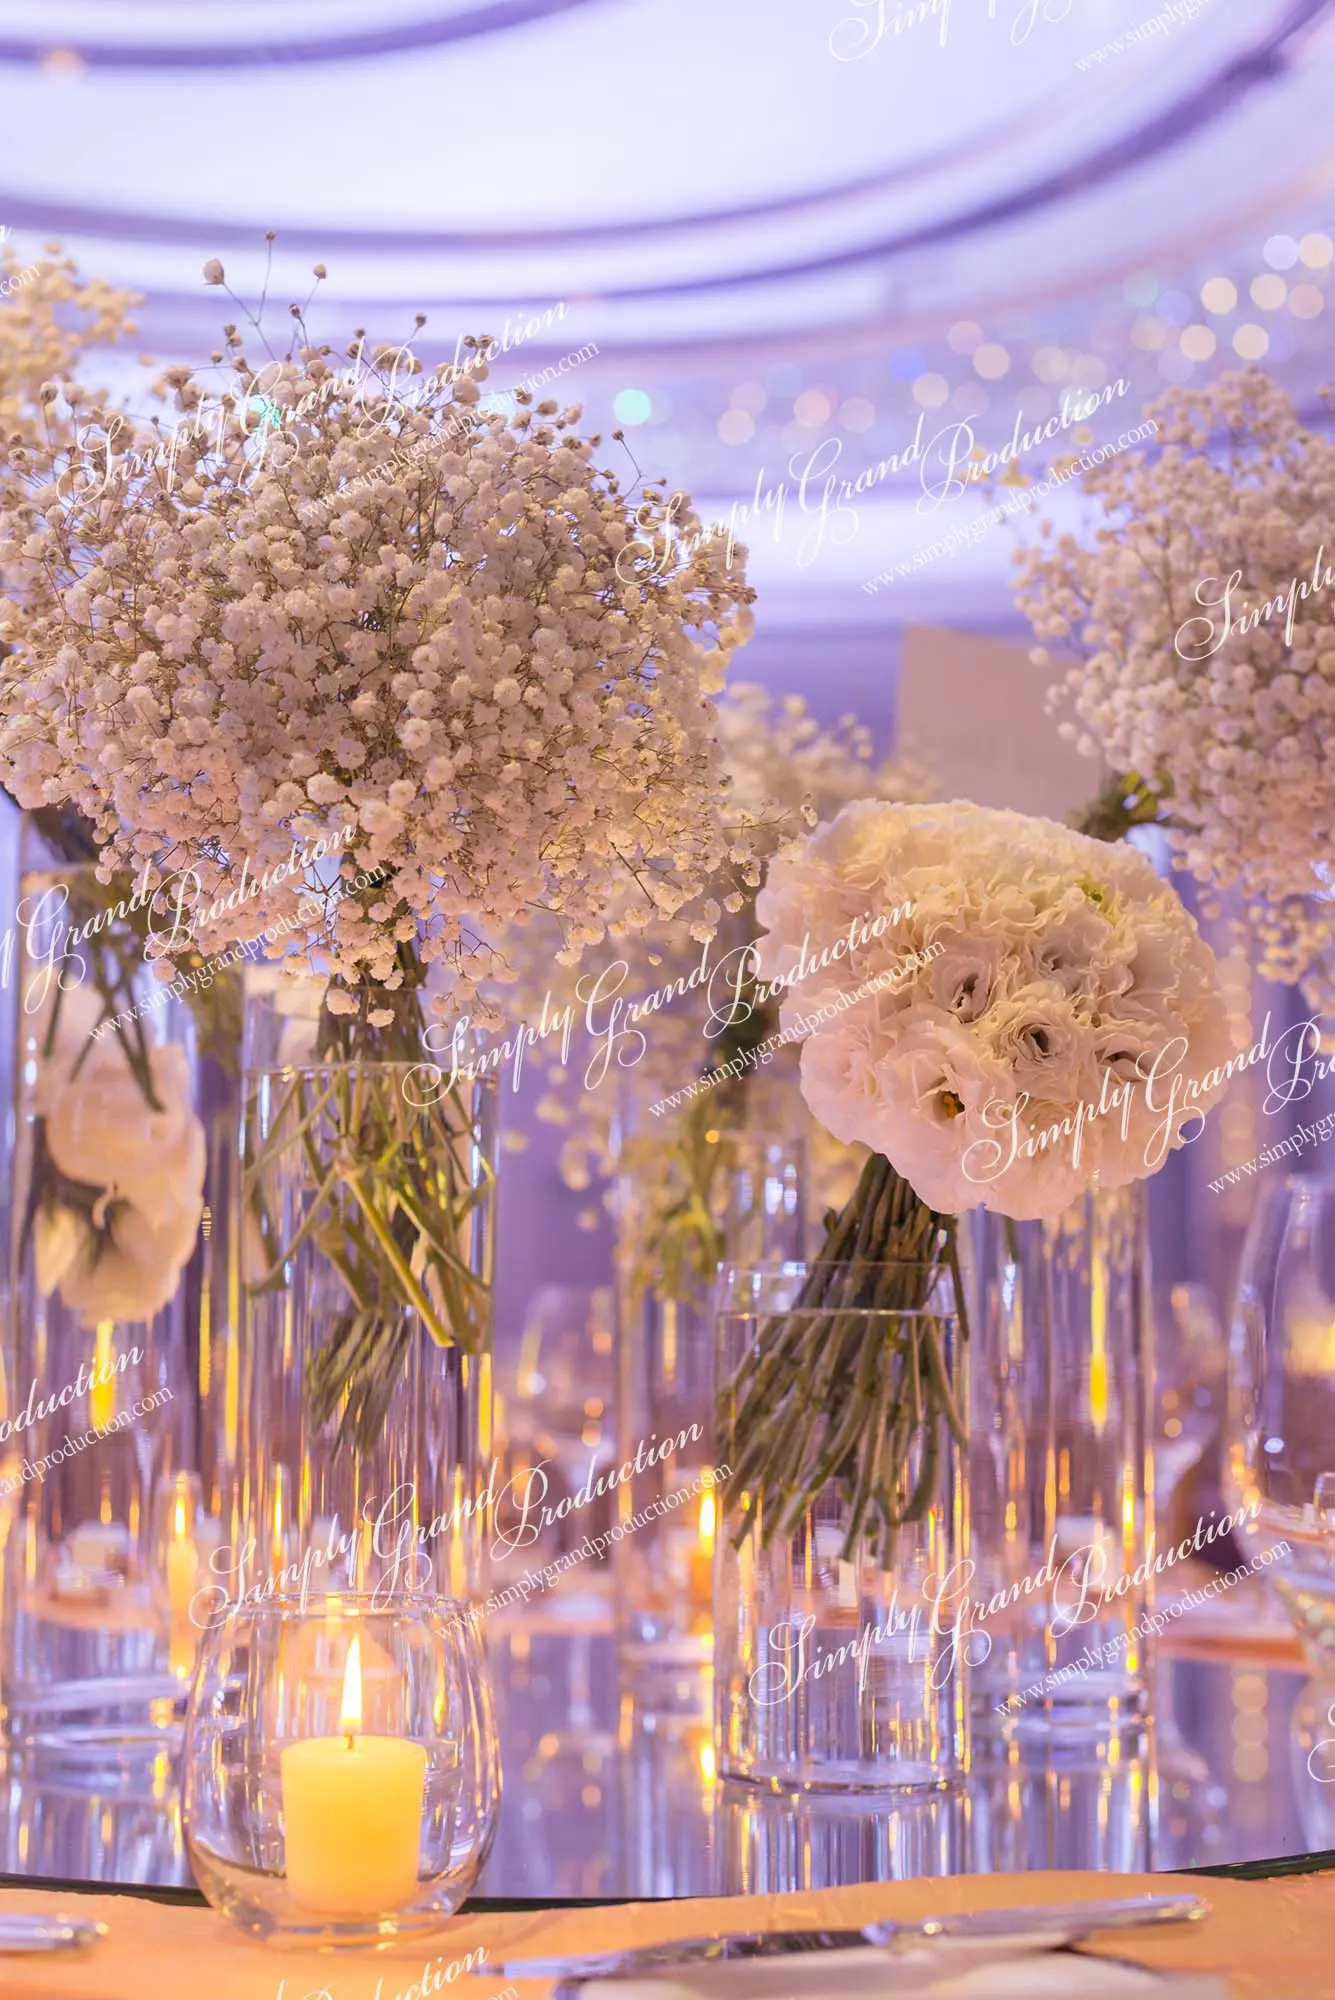 Simply_Grand_Production_Ballroom_wedding_decoration_banquet_centerpiece_white_floral_Grand_Hyatt_3_6_wm